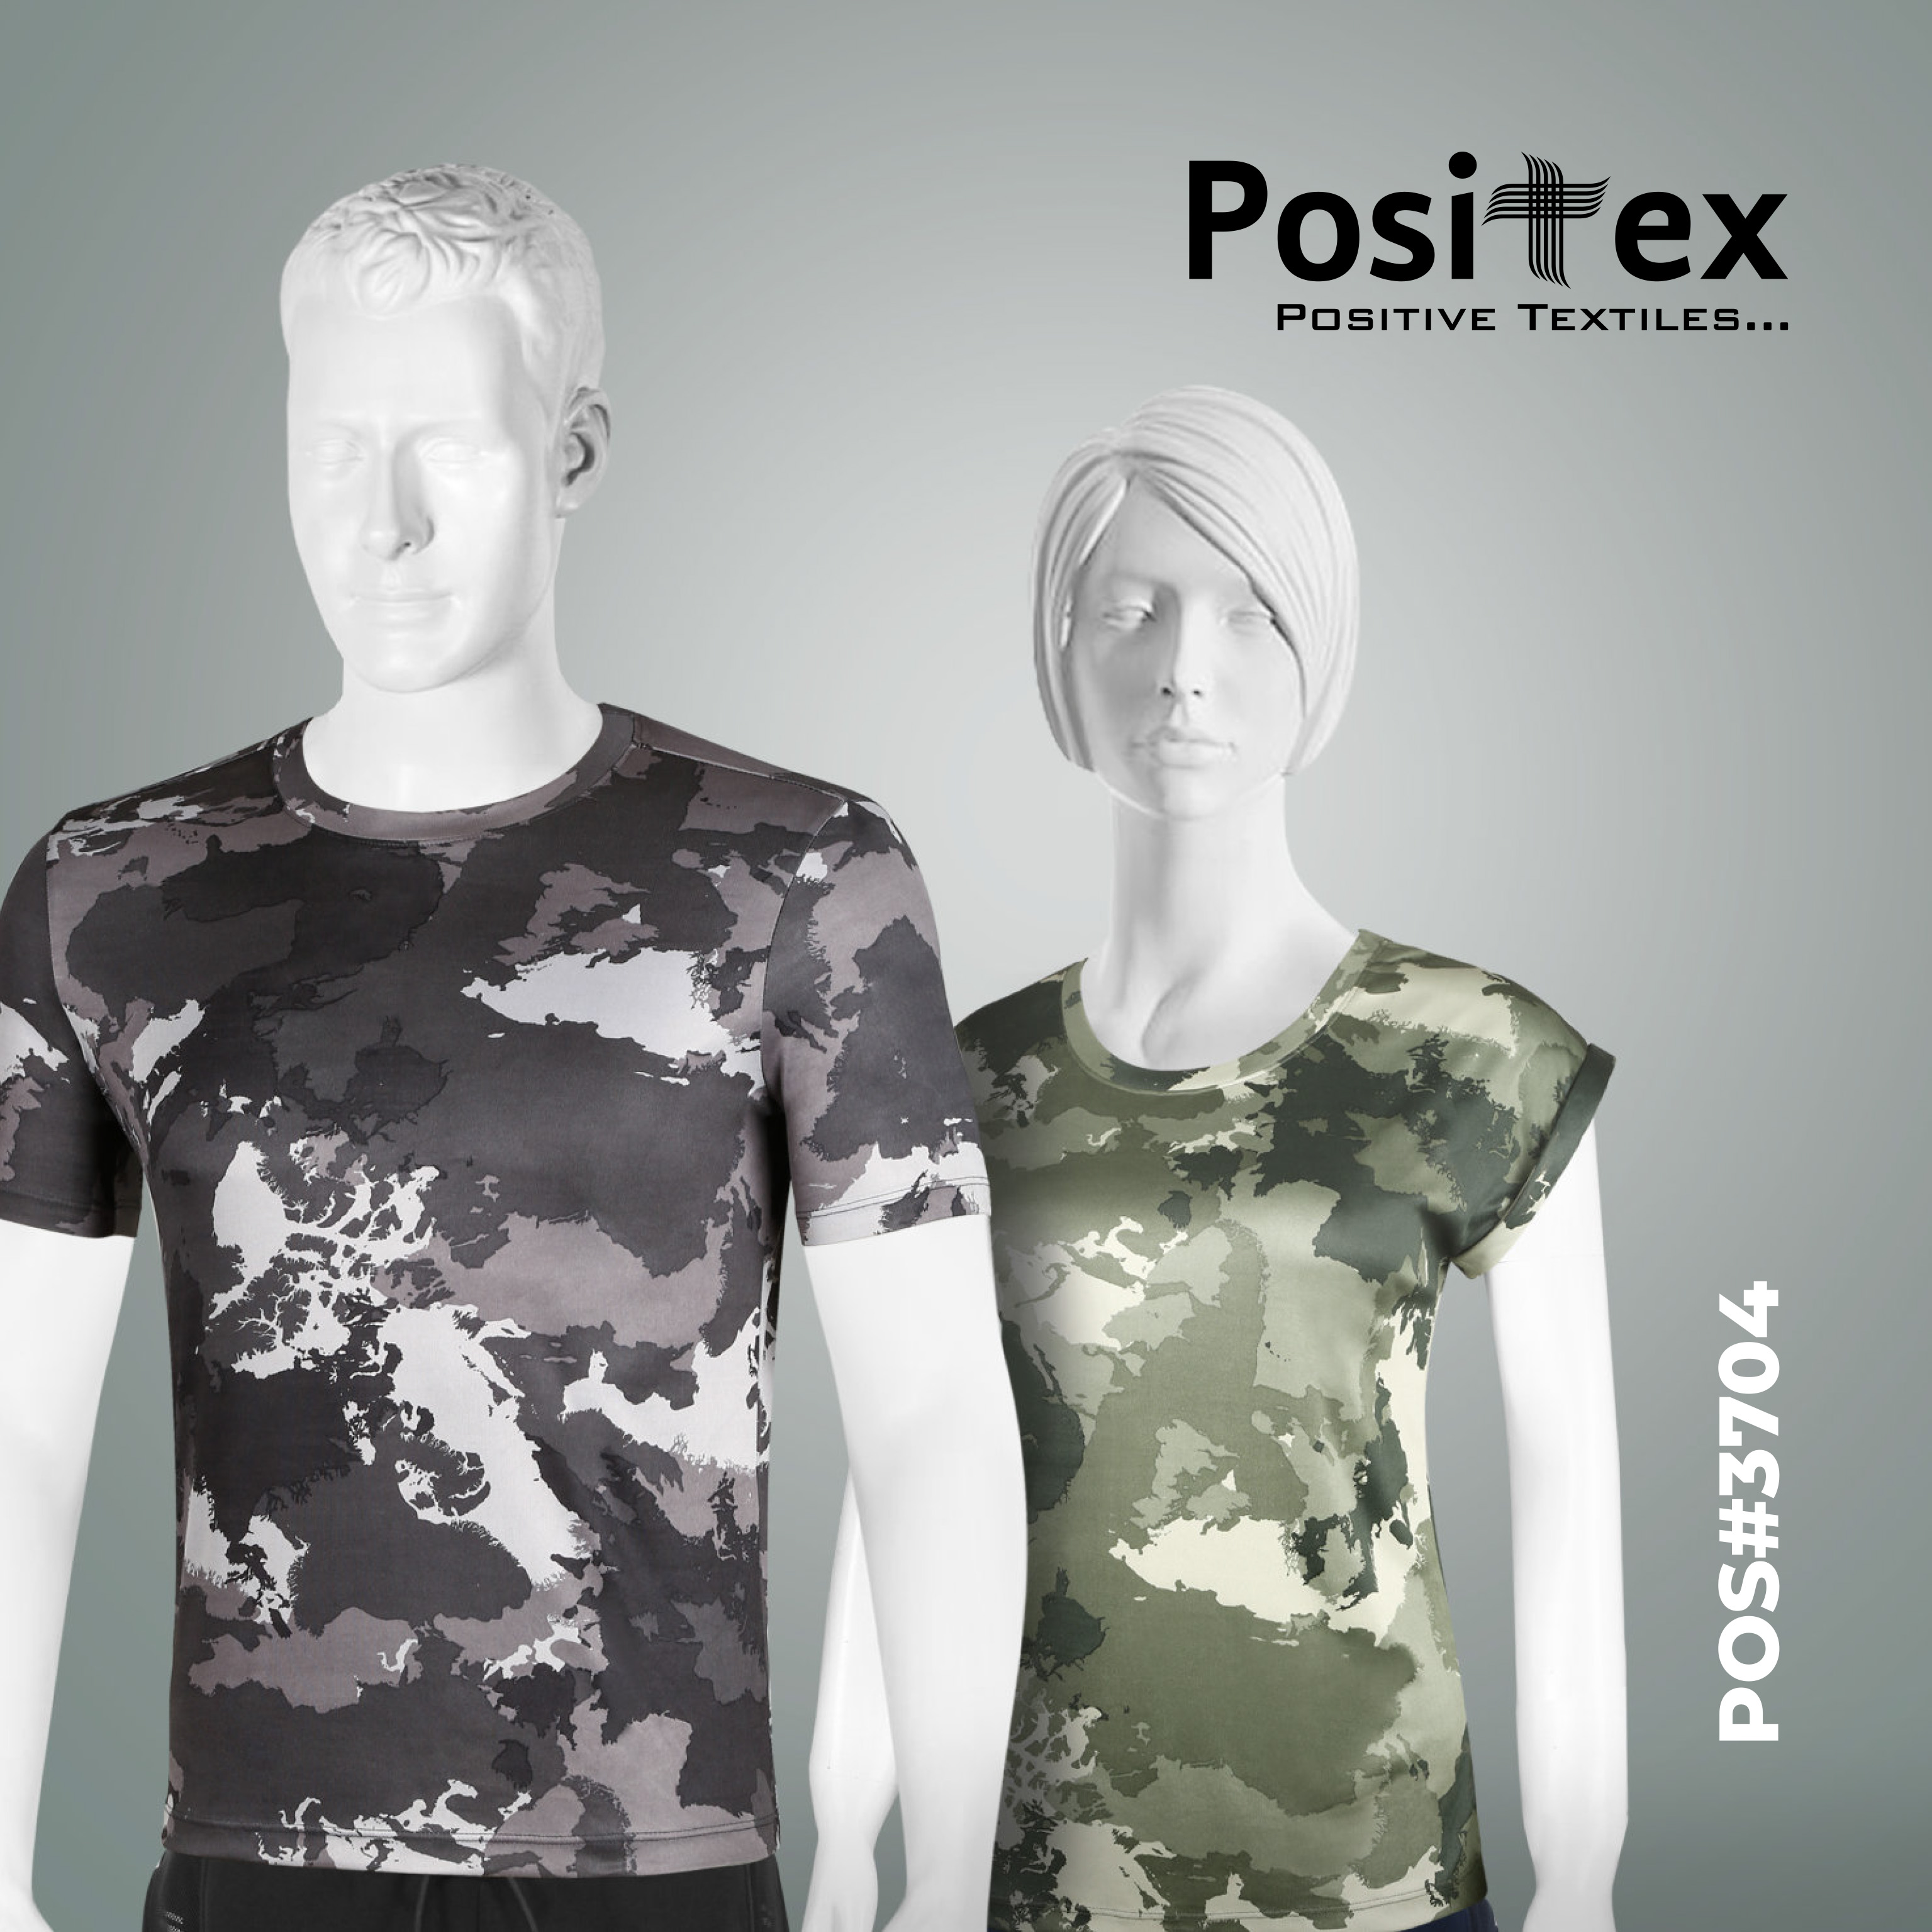 Positex Introduces Camo Print Interlock Fabric for Sportswear